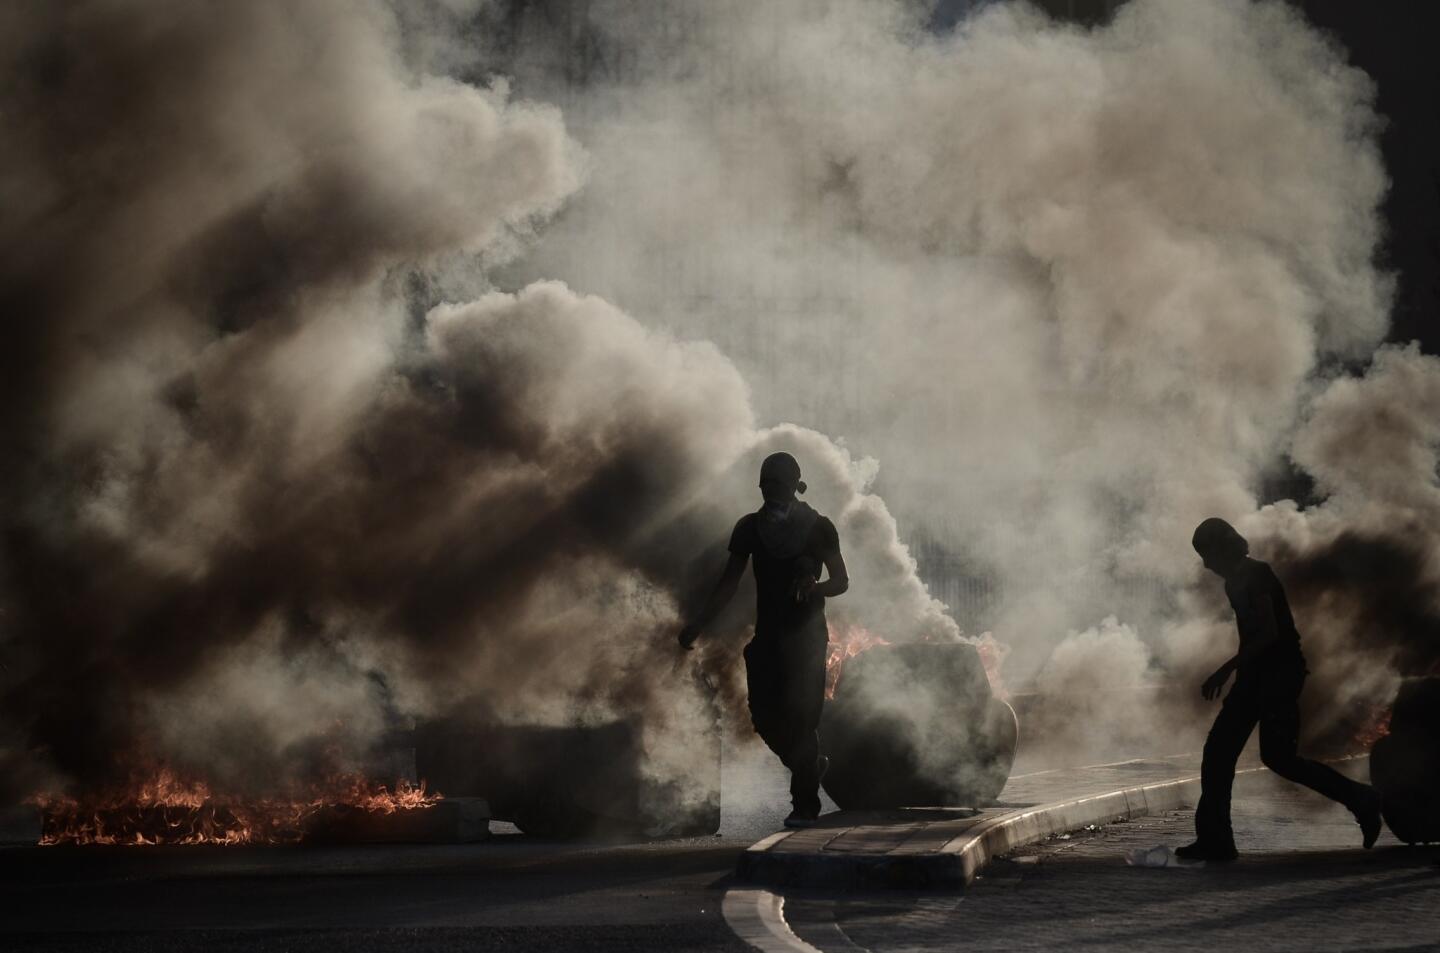 Unrest in Bahrain